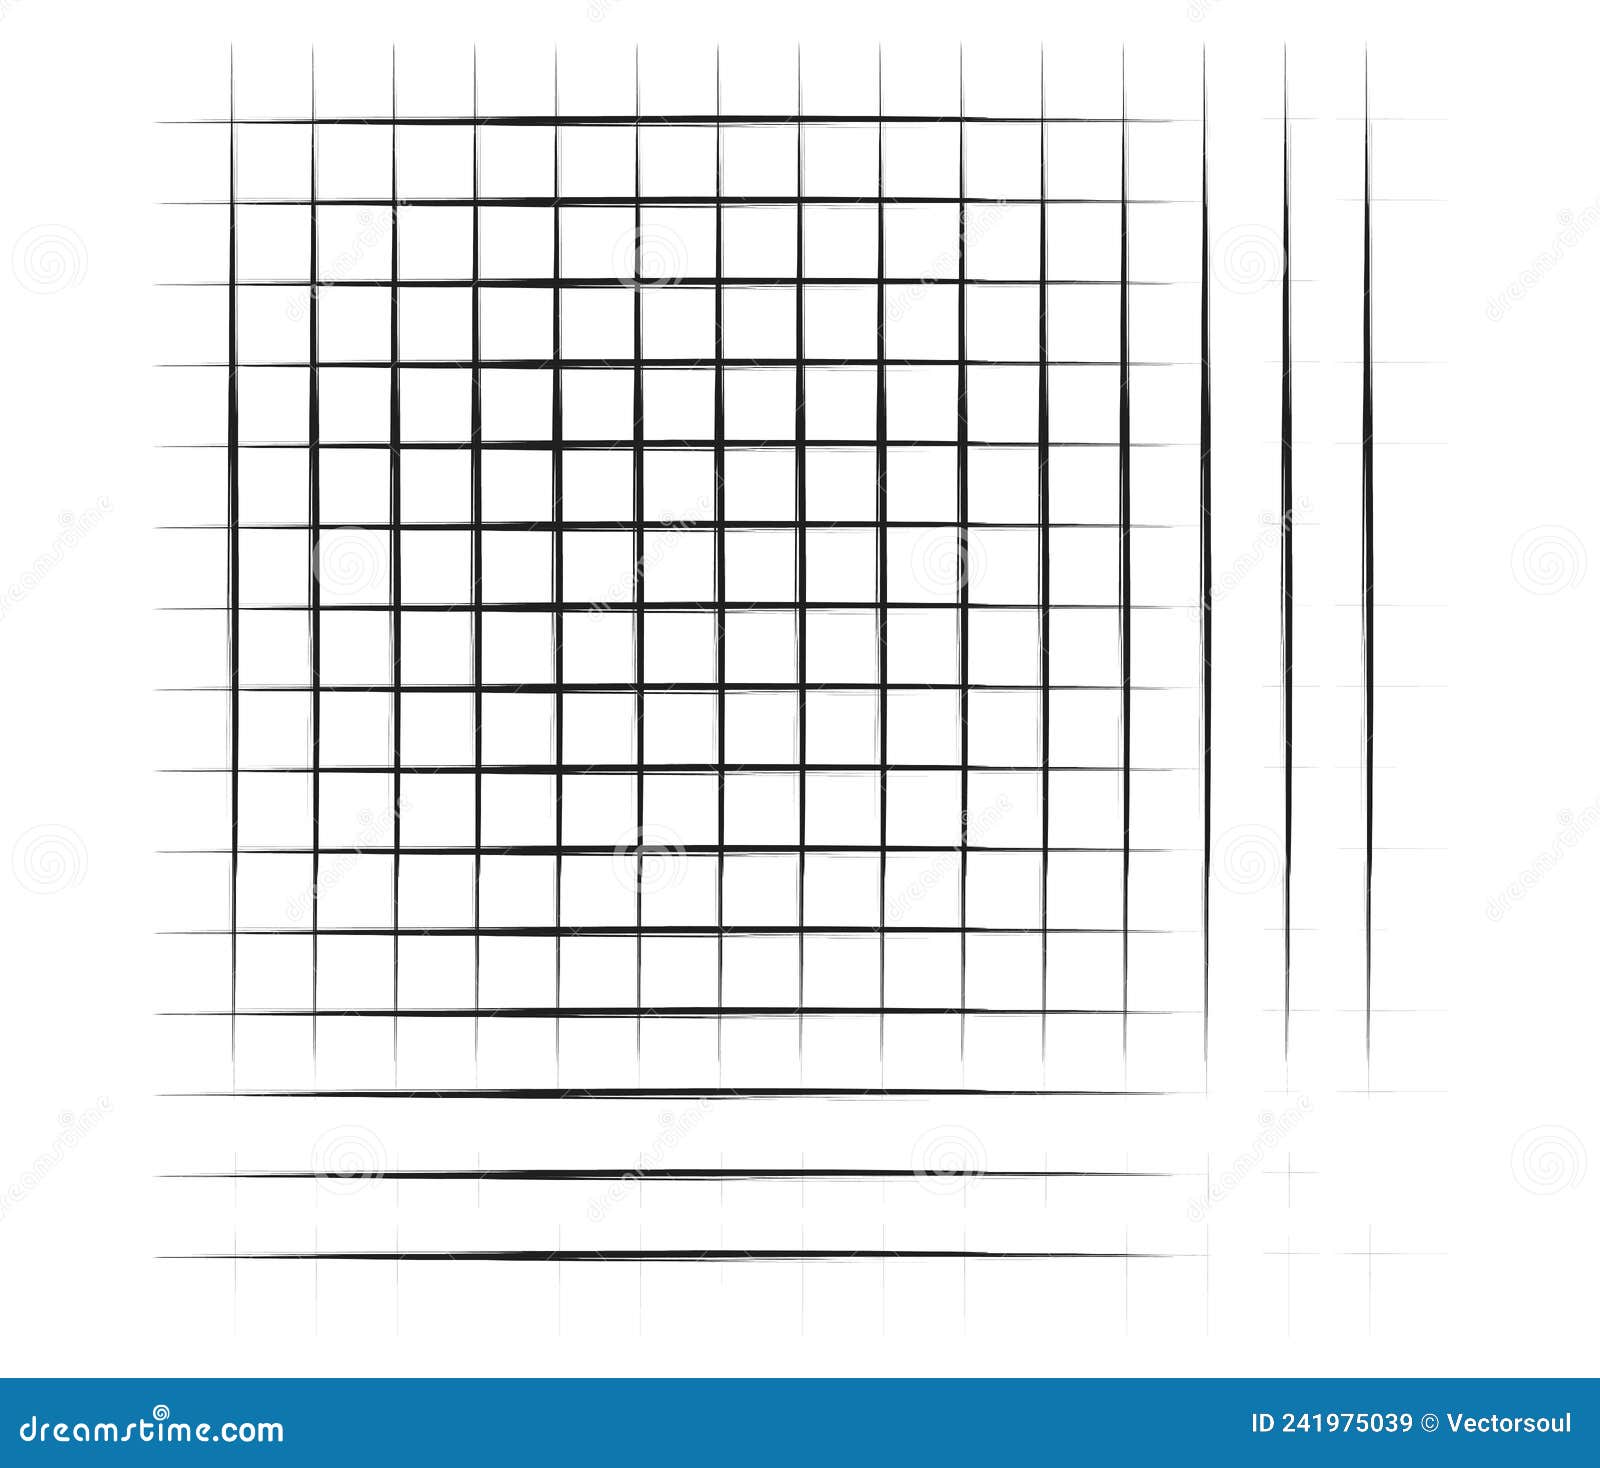 grid, mesh, graticule with grungy, irregular lines. grunge checkered grating, trellis, lattern pattern